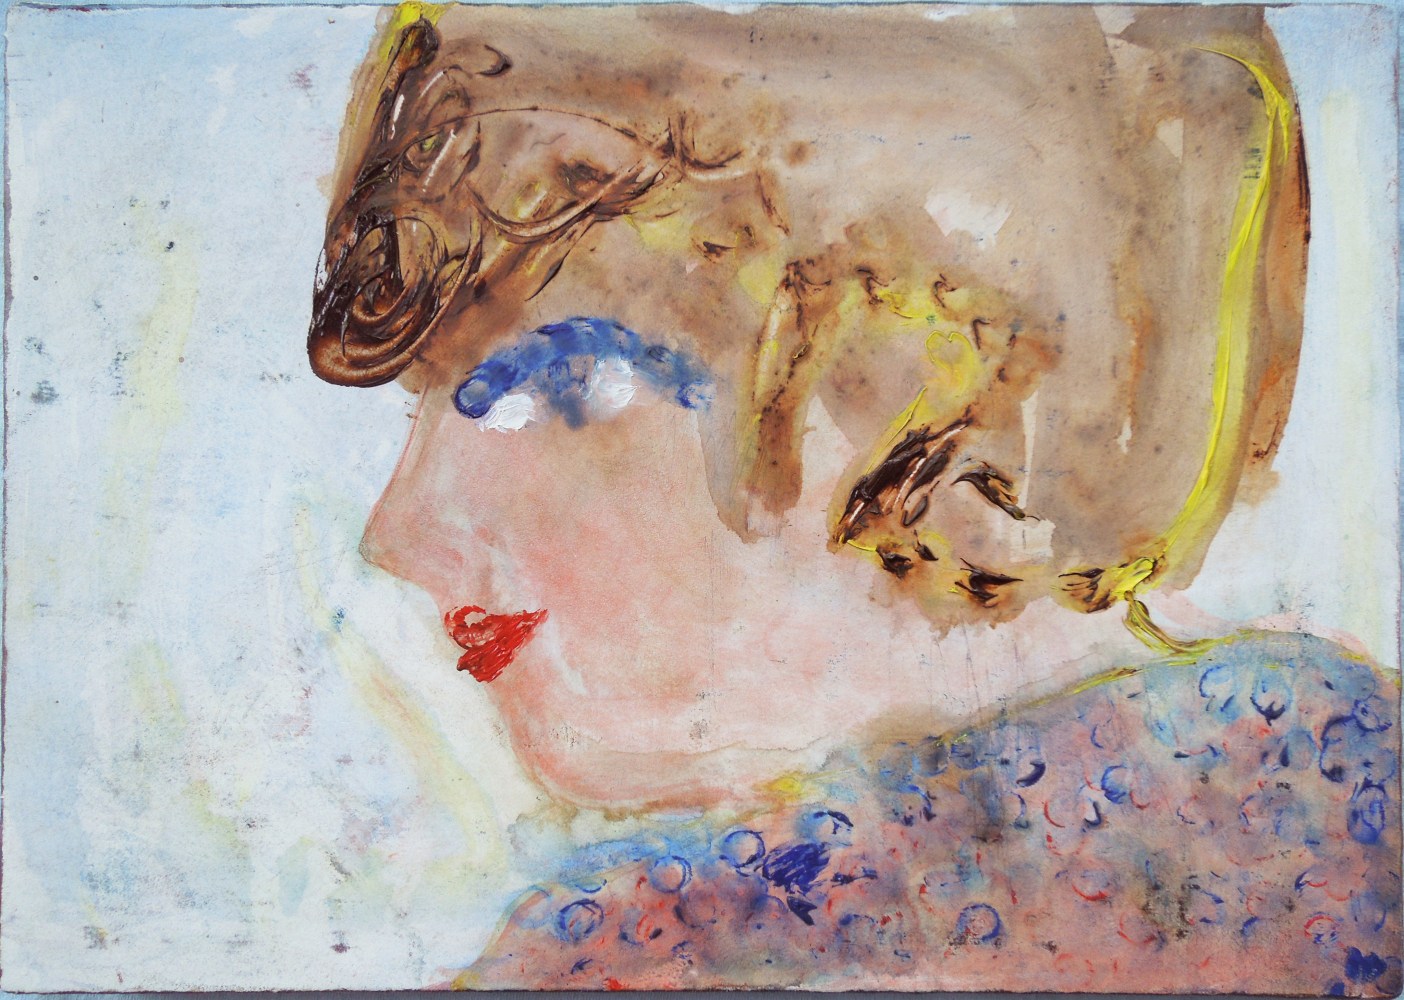 Untitled, 2015&amp;nbsp;
Oil on Board&amp;nbsp;
30 x 21 cm